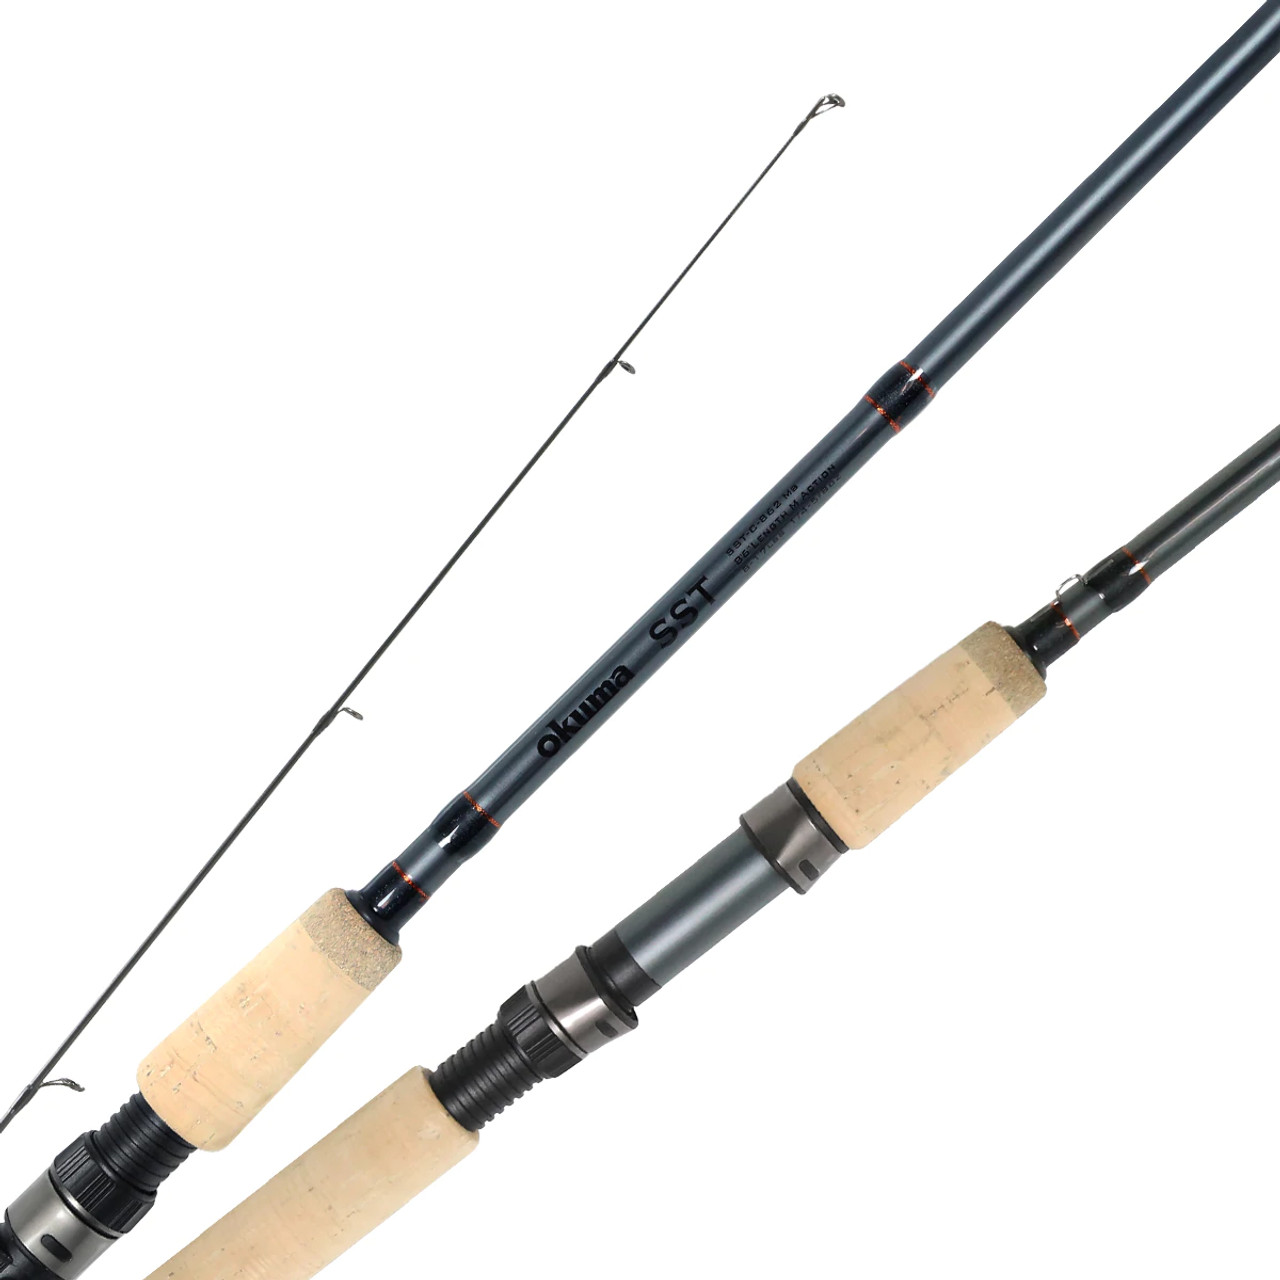 Okuma Cascade Graphite Fly Fishing Rod and Reel Freshwater Combo 